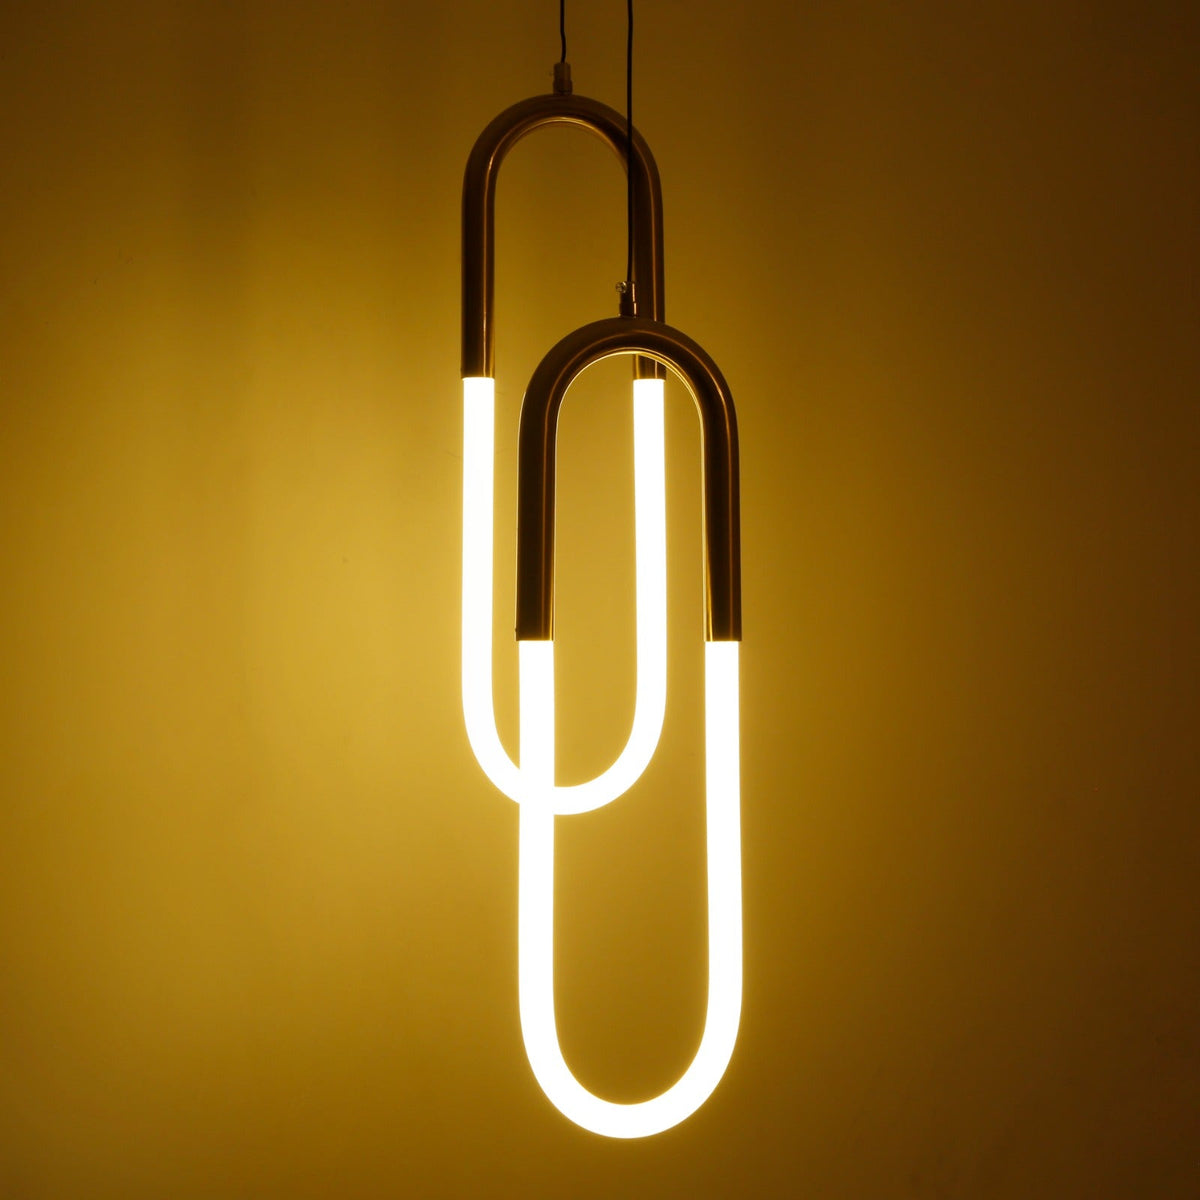 Buy Double Trouble LED Pendant Light hanging